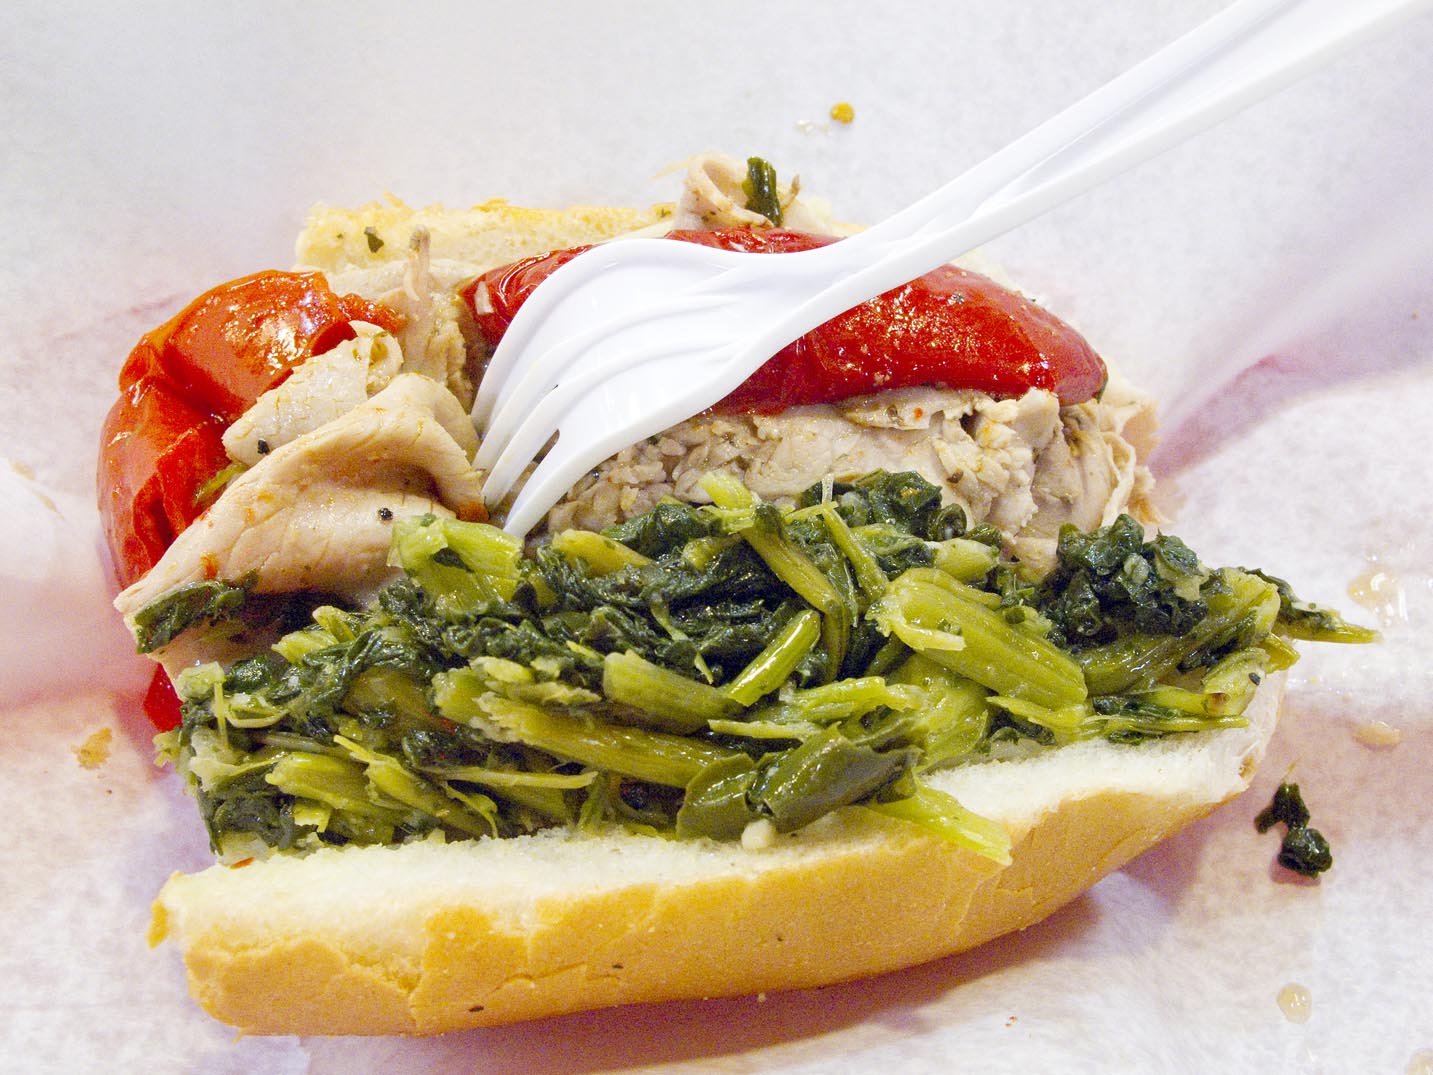 A roast pork sandwich with broccoli rabe from DiNic's in Philadelphia.